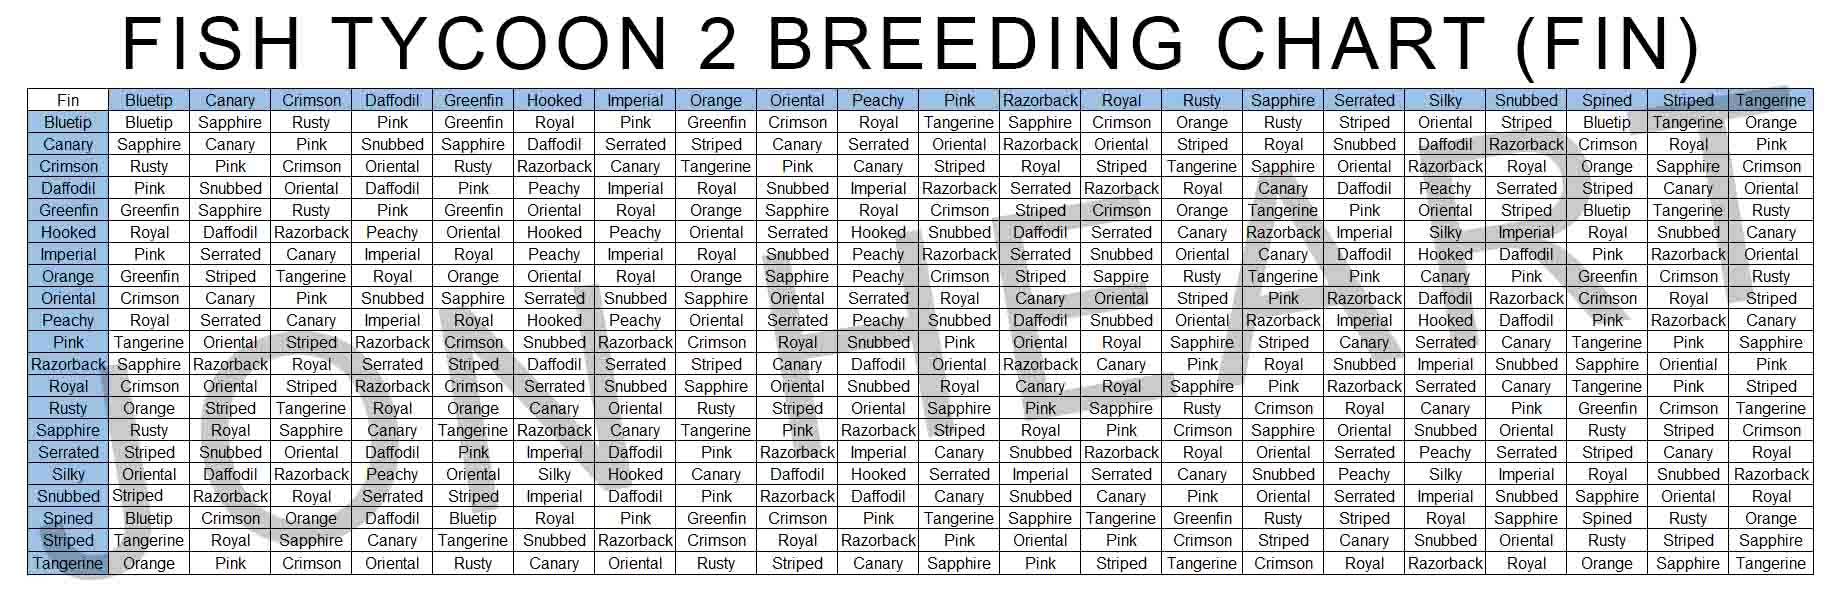 fish tycoon 2 breeding chart